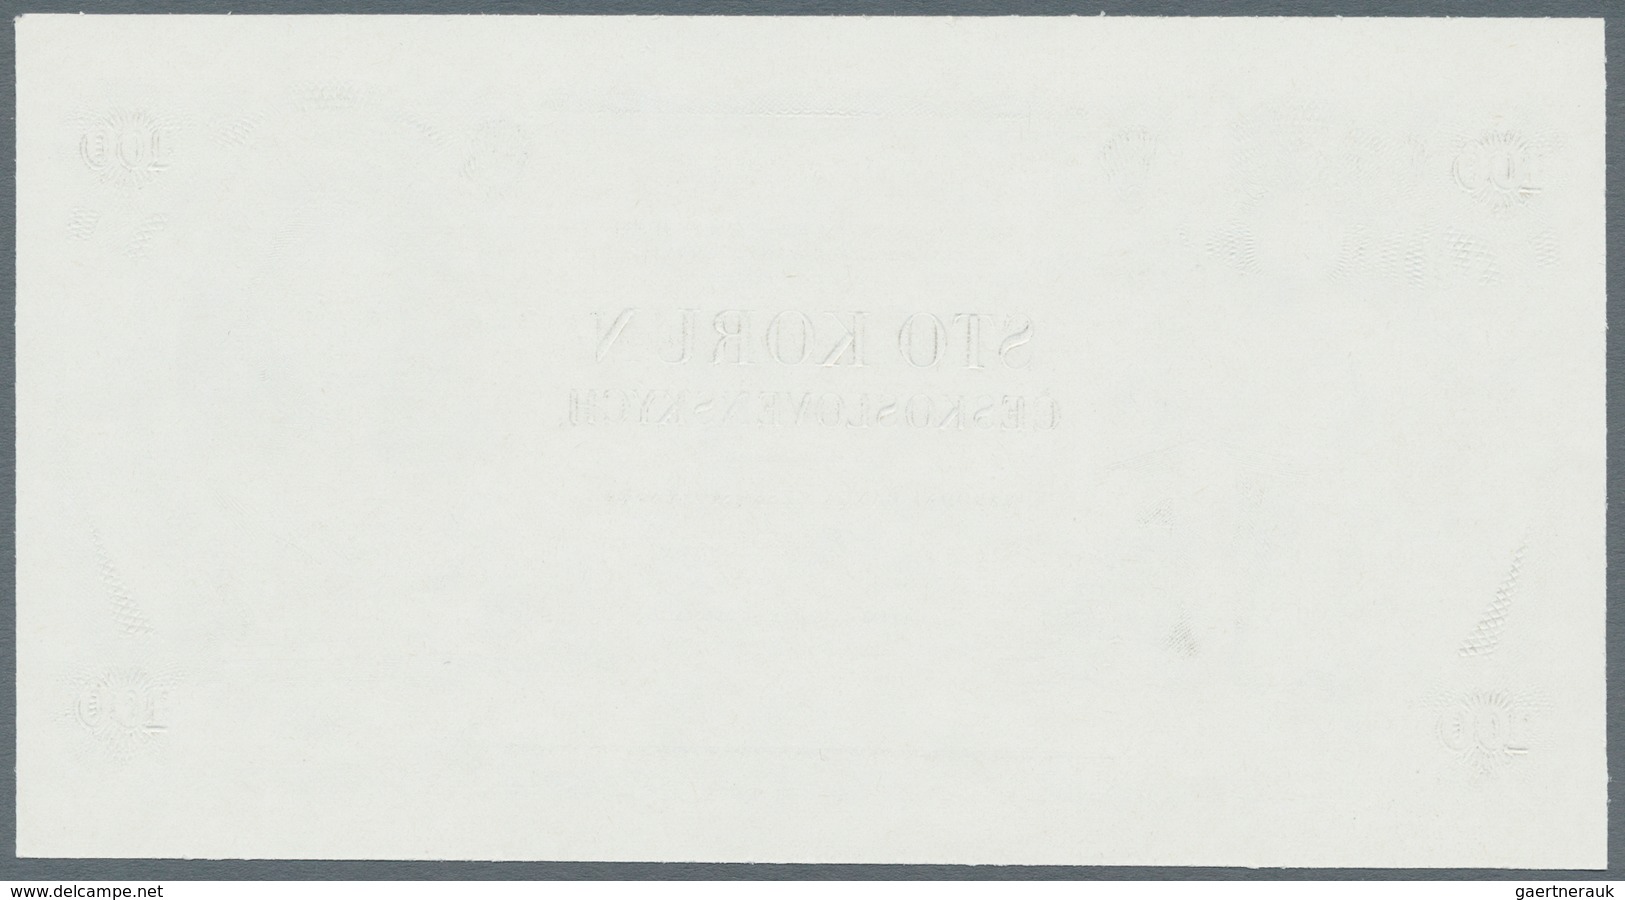 Czechoslovakia / Tschechoslowakei: Uniface Intaglio Printed Front Proof For The 100 Korun 1931in Bla - Checoslovaquia